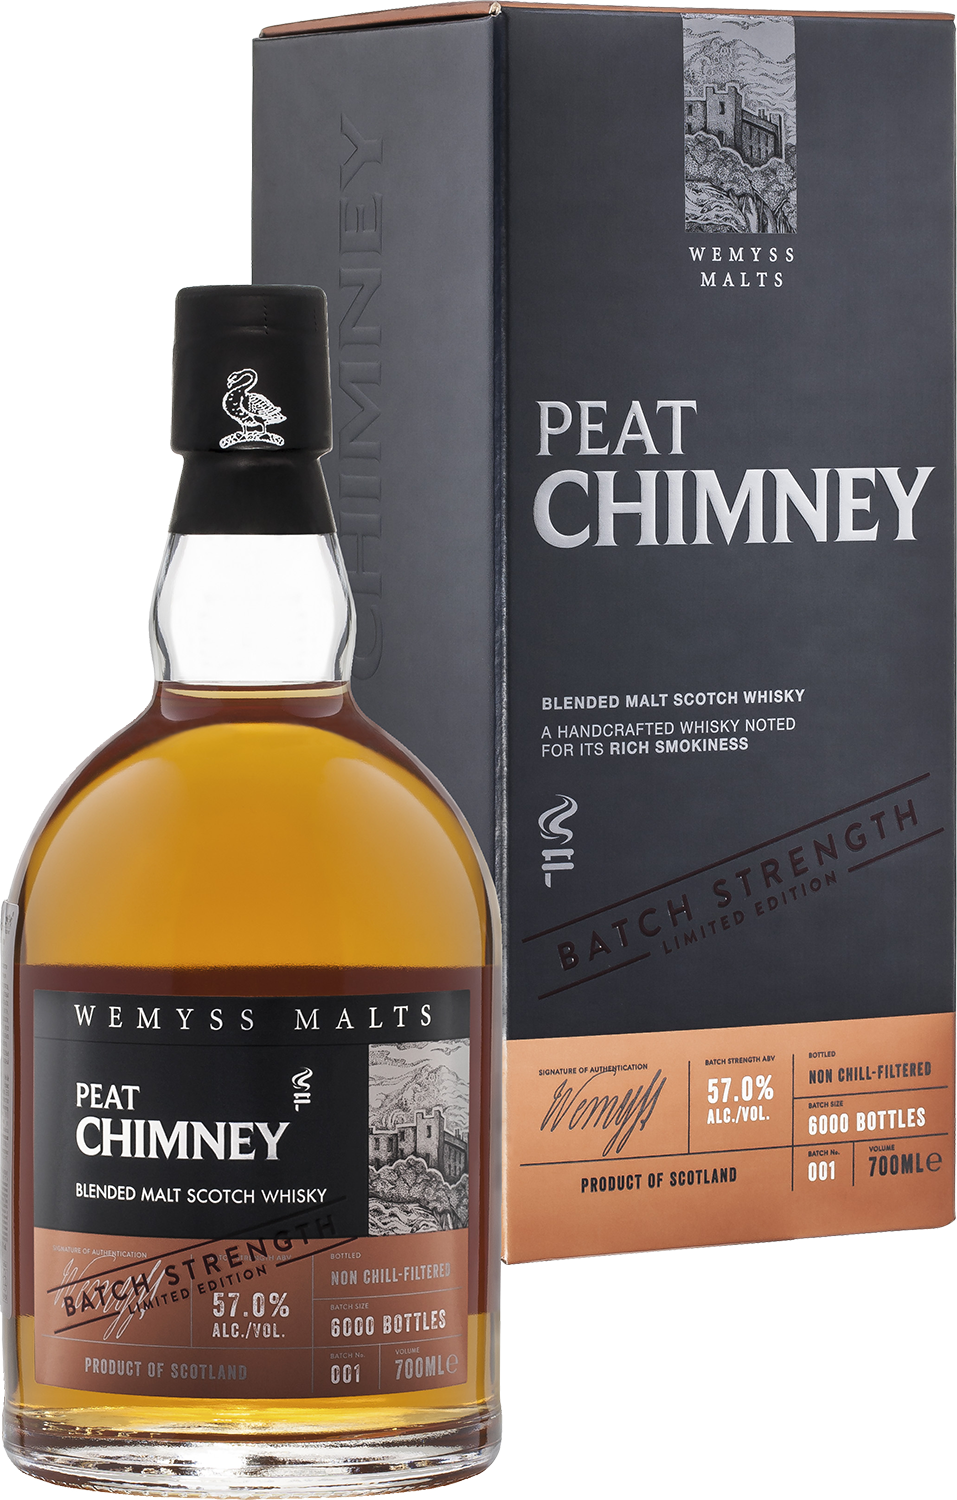 Peat Chimney Batch Strength Wemyss Malts blended malt scotch whisky compass box peat monster blended malt scotch whisky